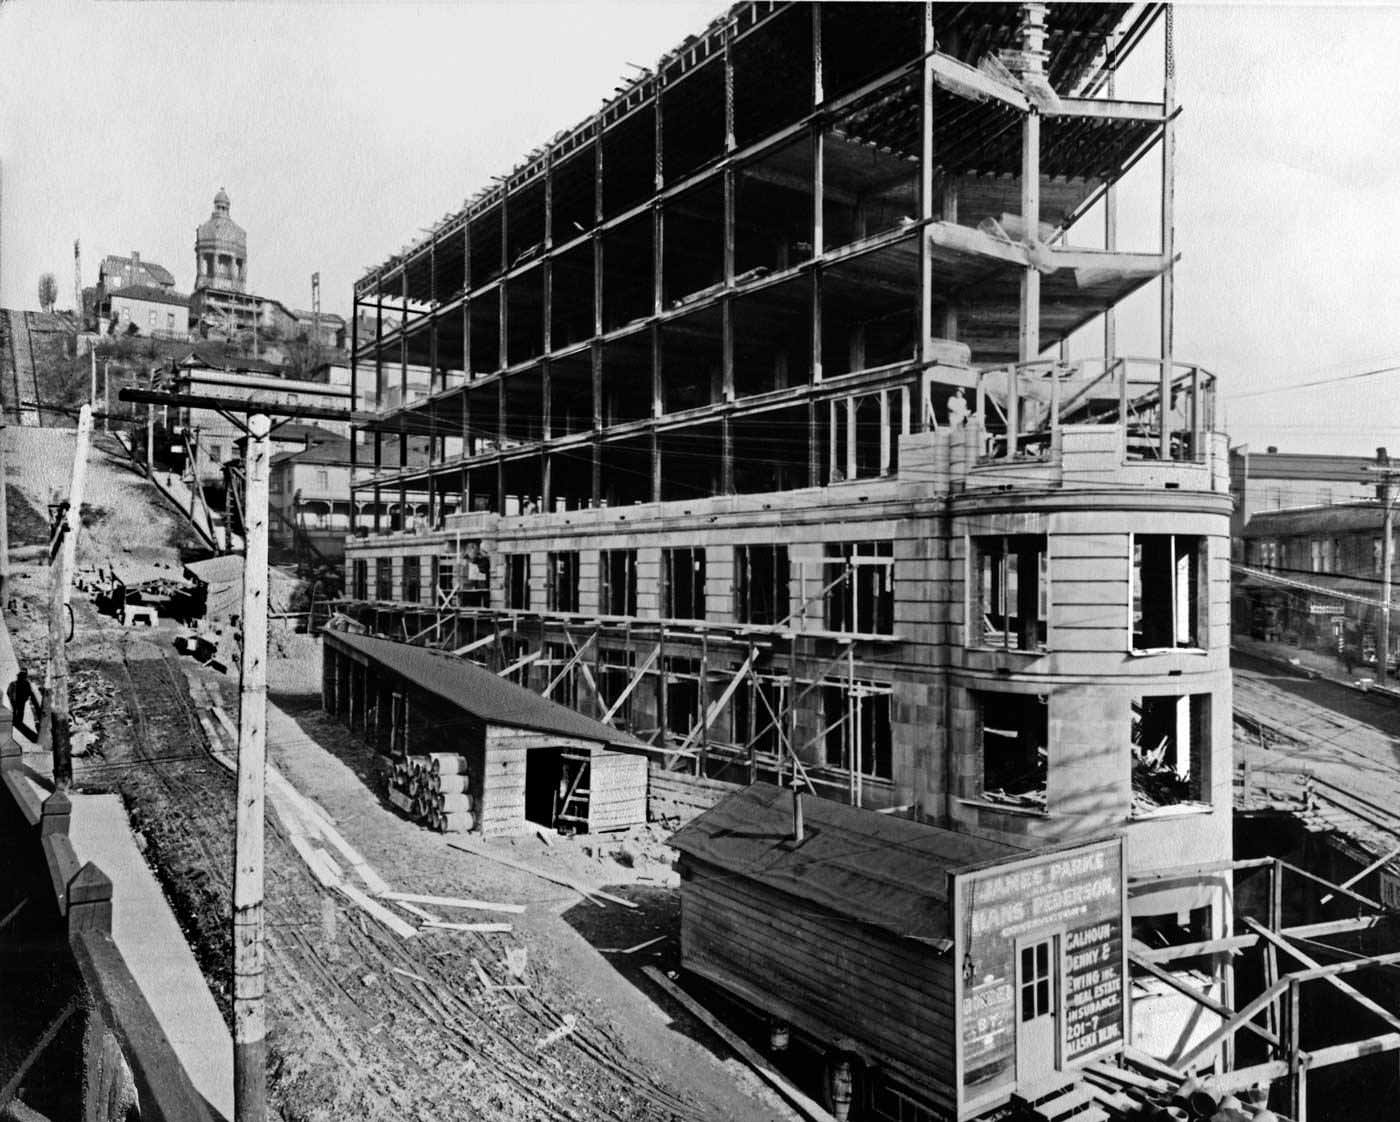 Yesler Building under construction, 1909